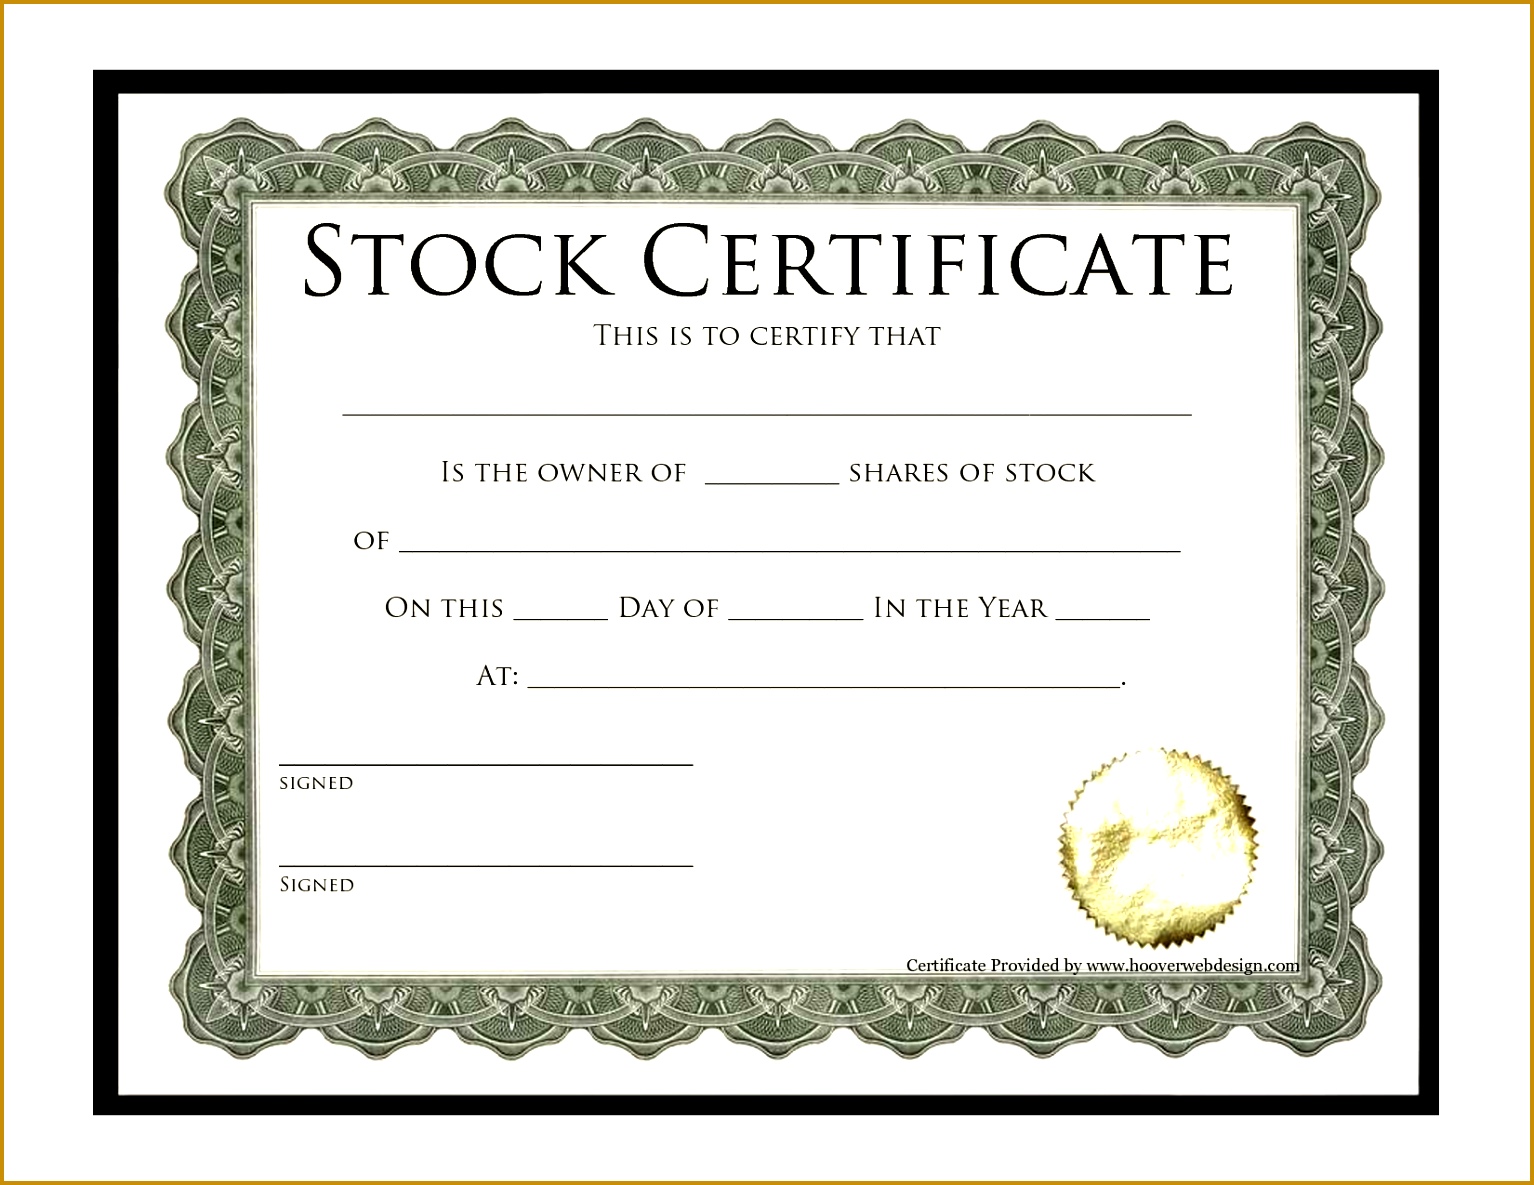 Stock Certificate Template DOCX 11851534